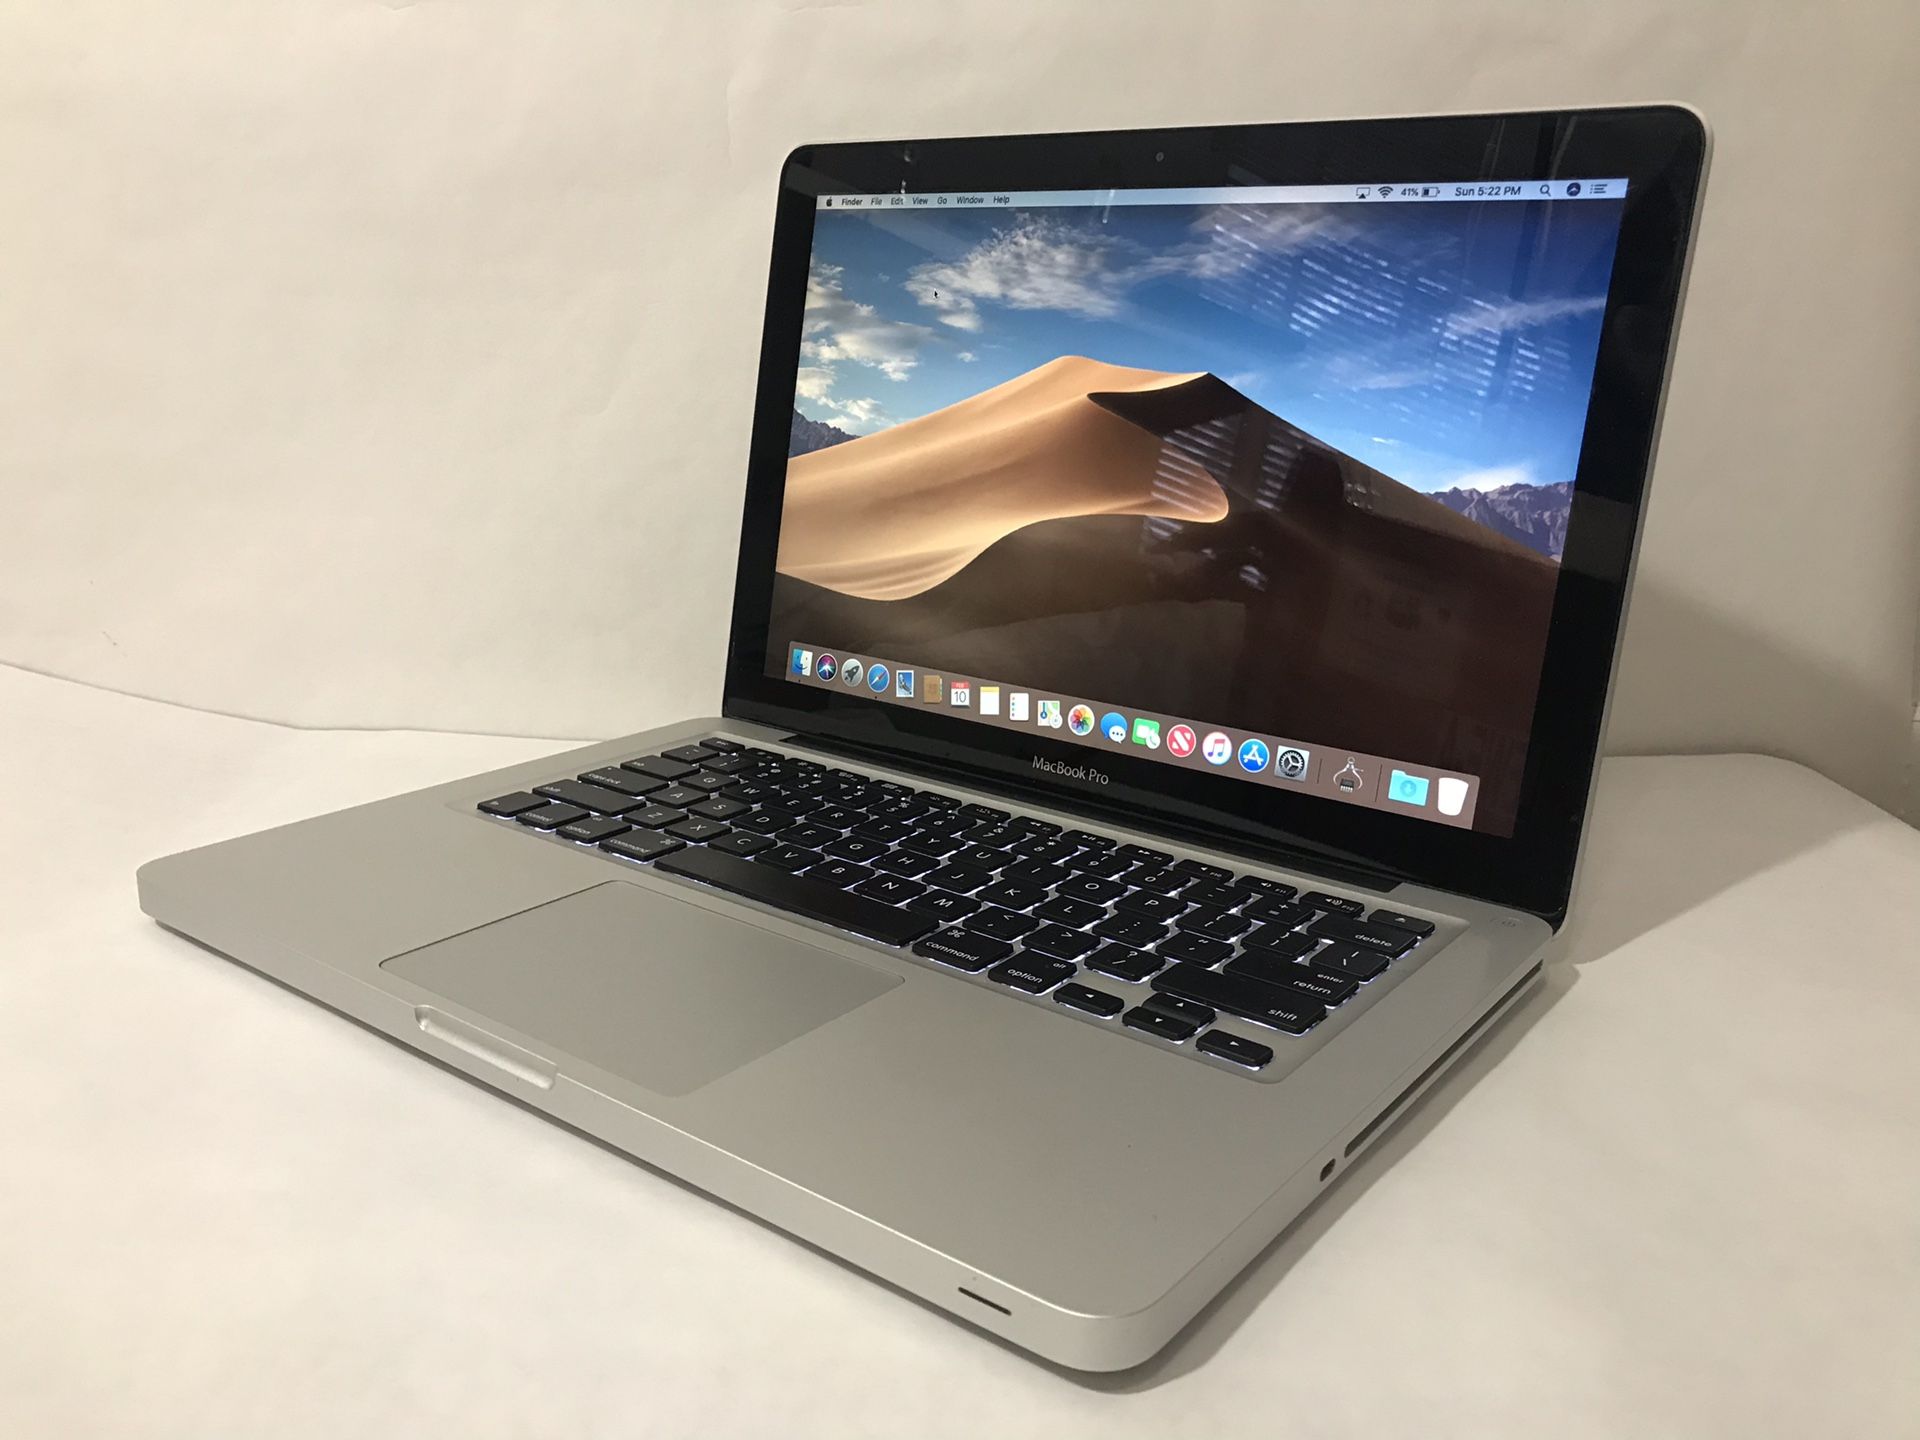 Apple MacBook Pro 13” Late 2011 Core i5, 8GB Ram, 1TB SATA in Great Shape